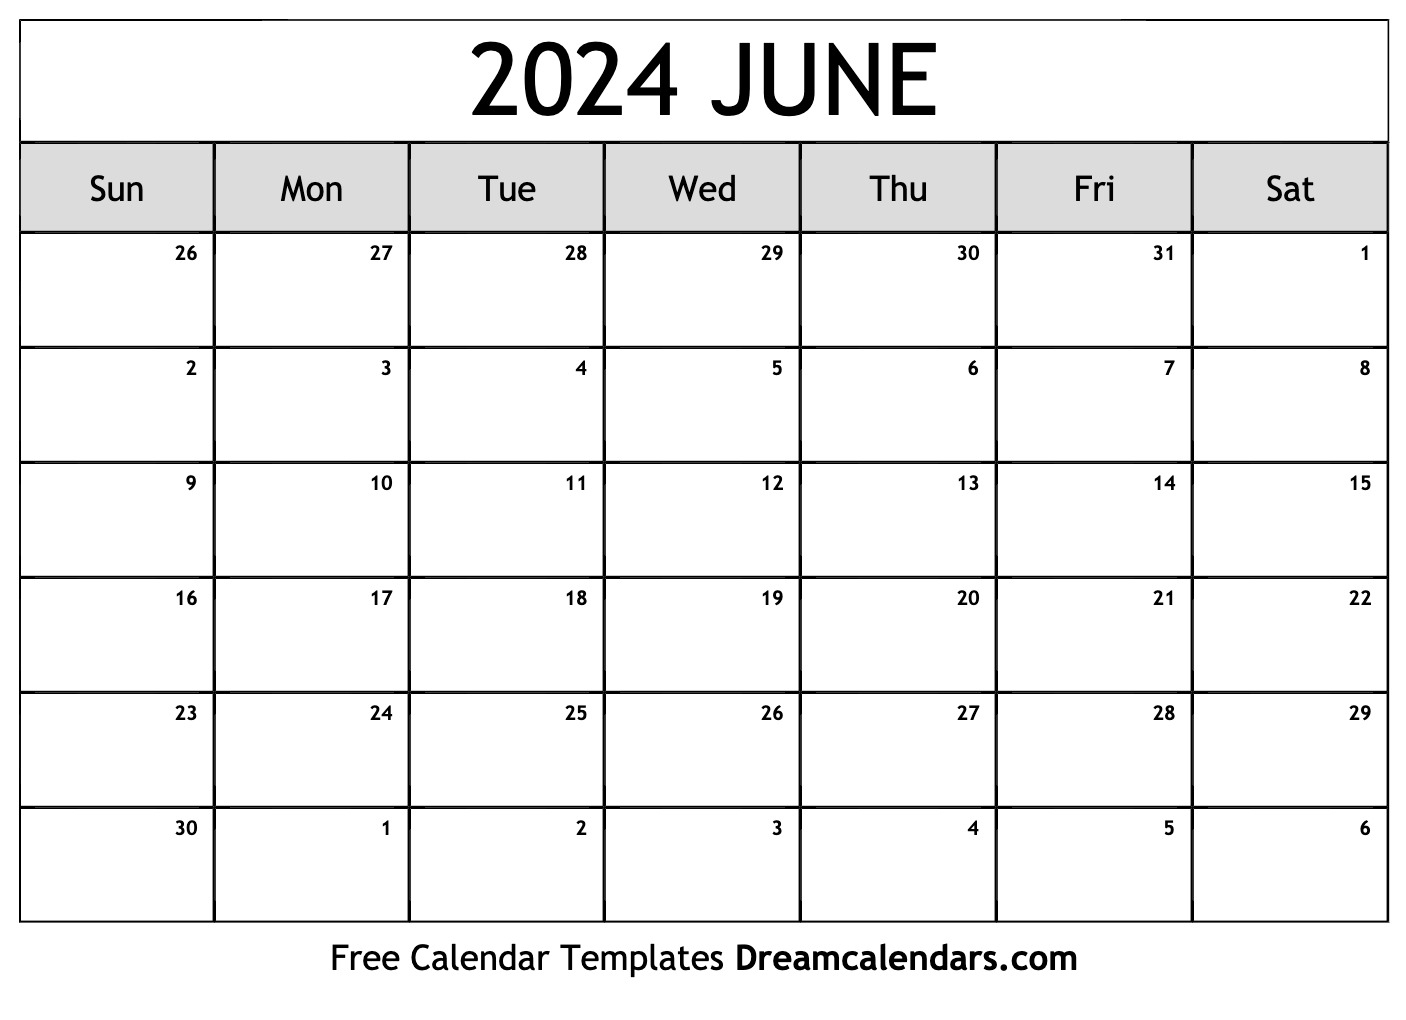 June 2024 Calendar | Free Blank Printable With Holidays for June Free Printable Calendar 2024